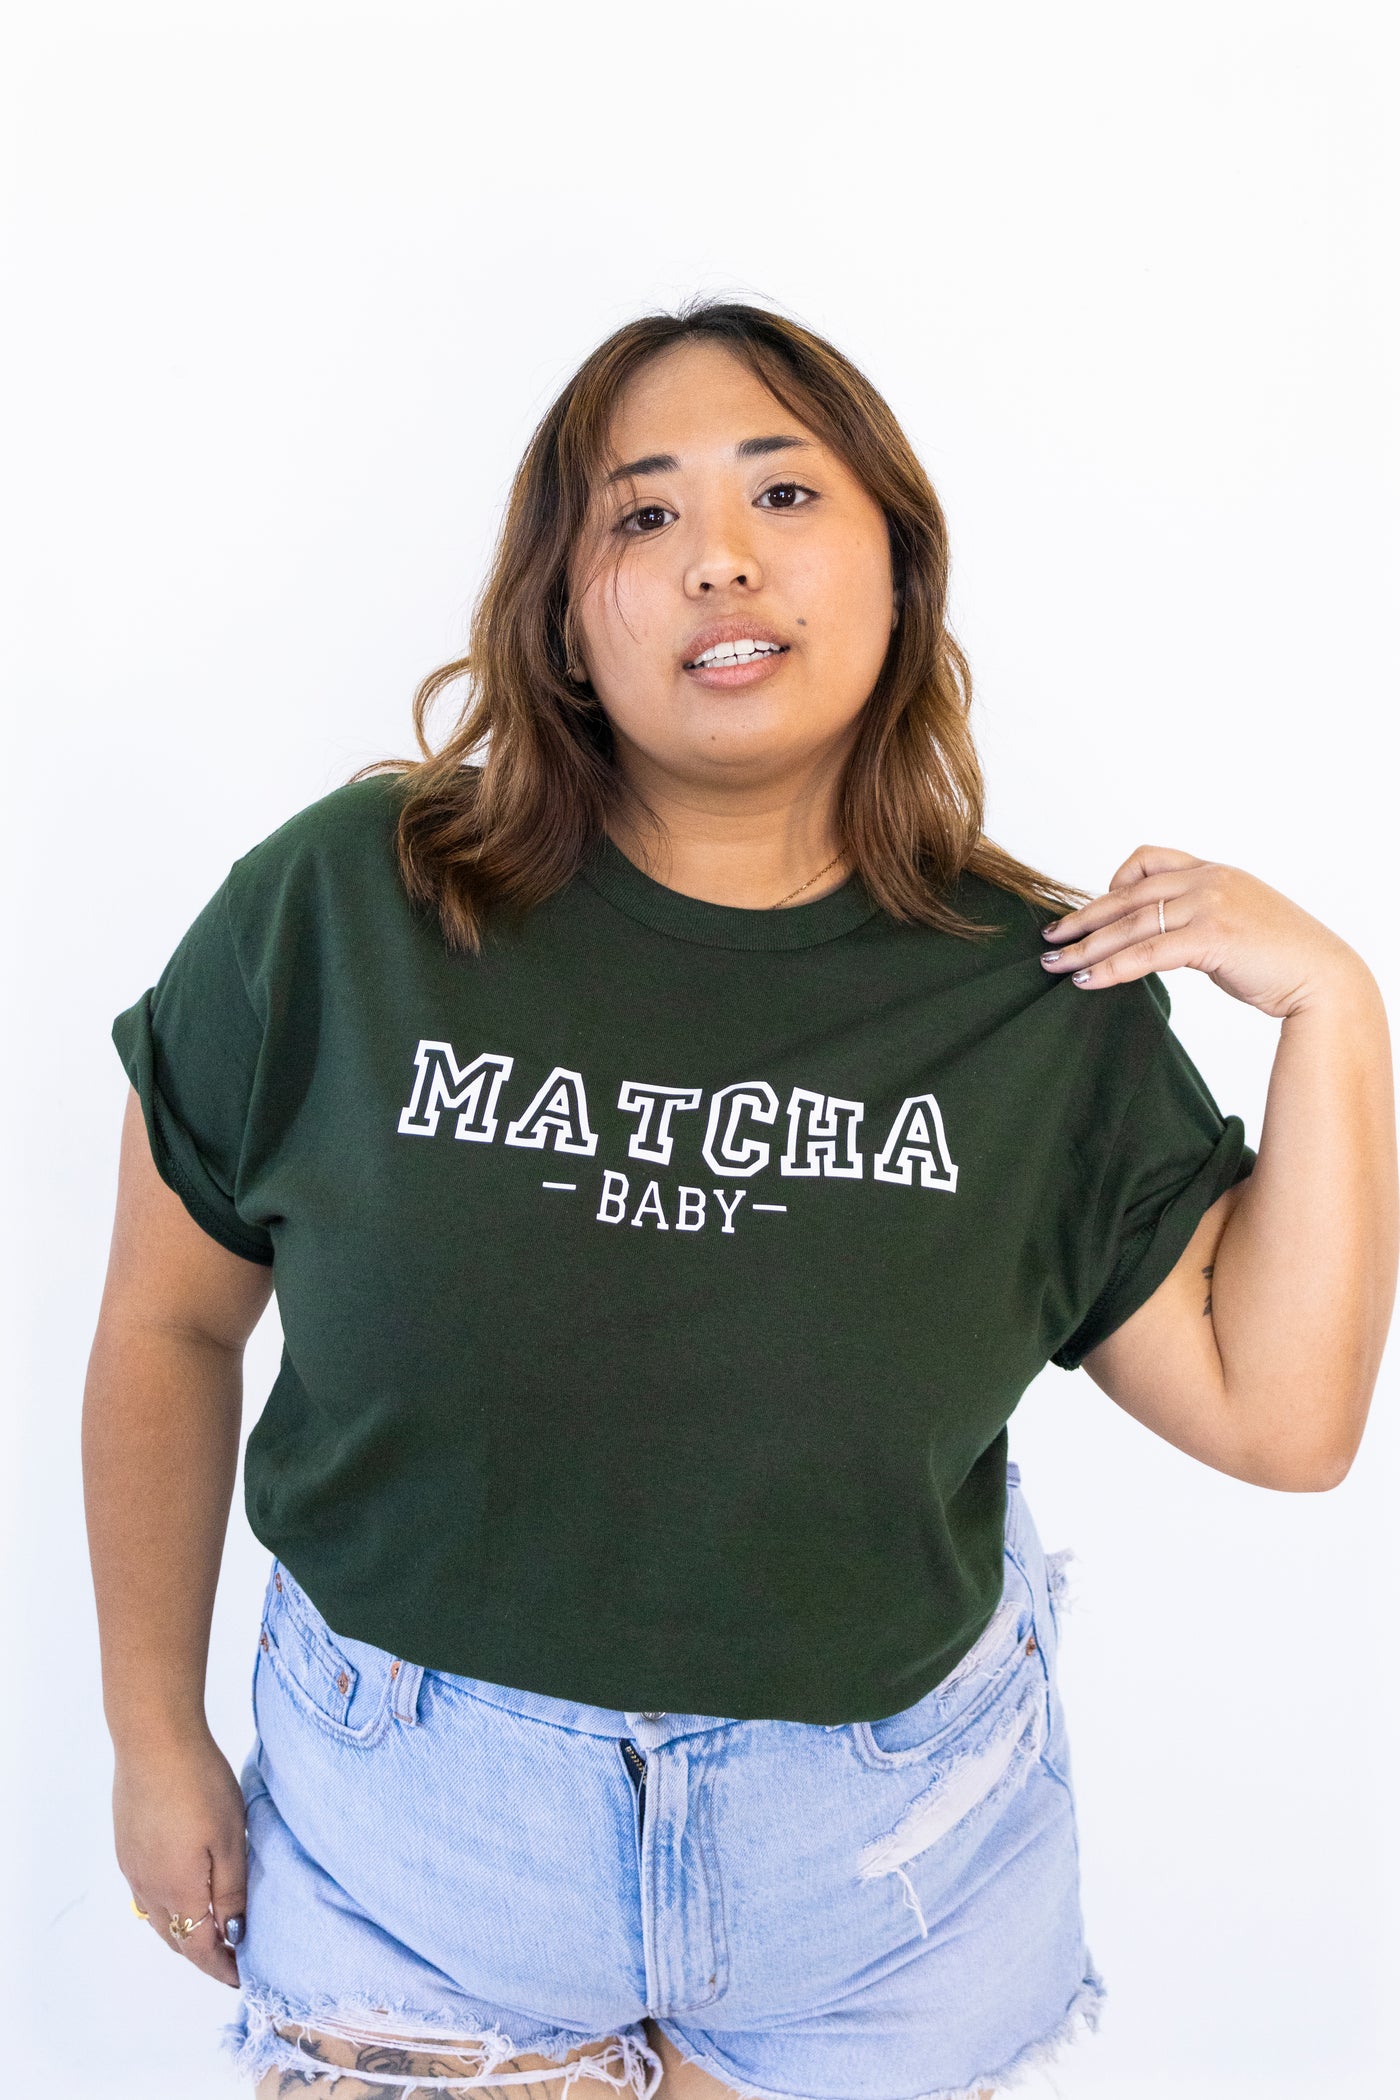 Matcha Lover's Delight: Premium Matcha baby T-shirt - APerfect Gift for Matcha Tea Enthusiasts